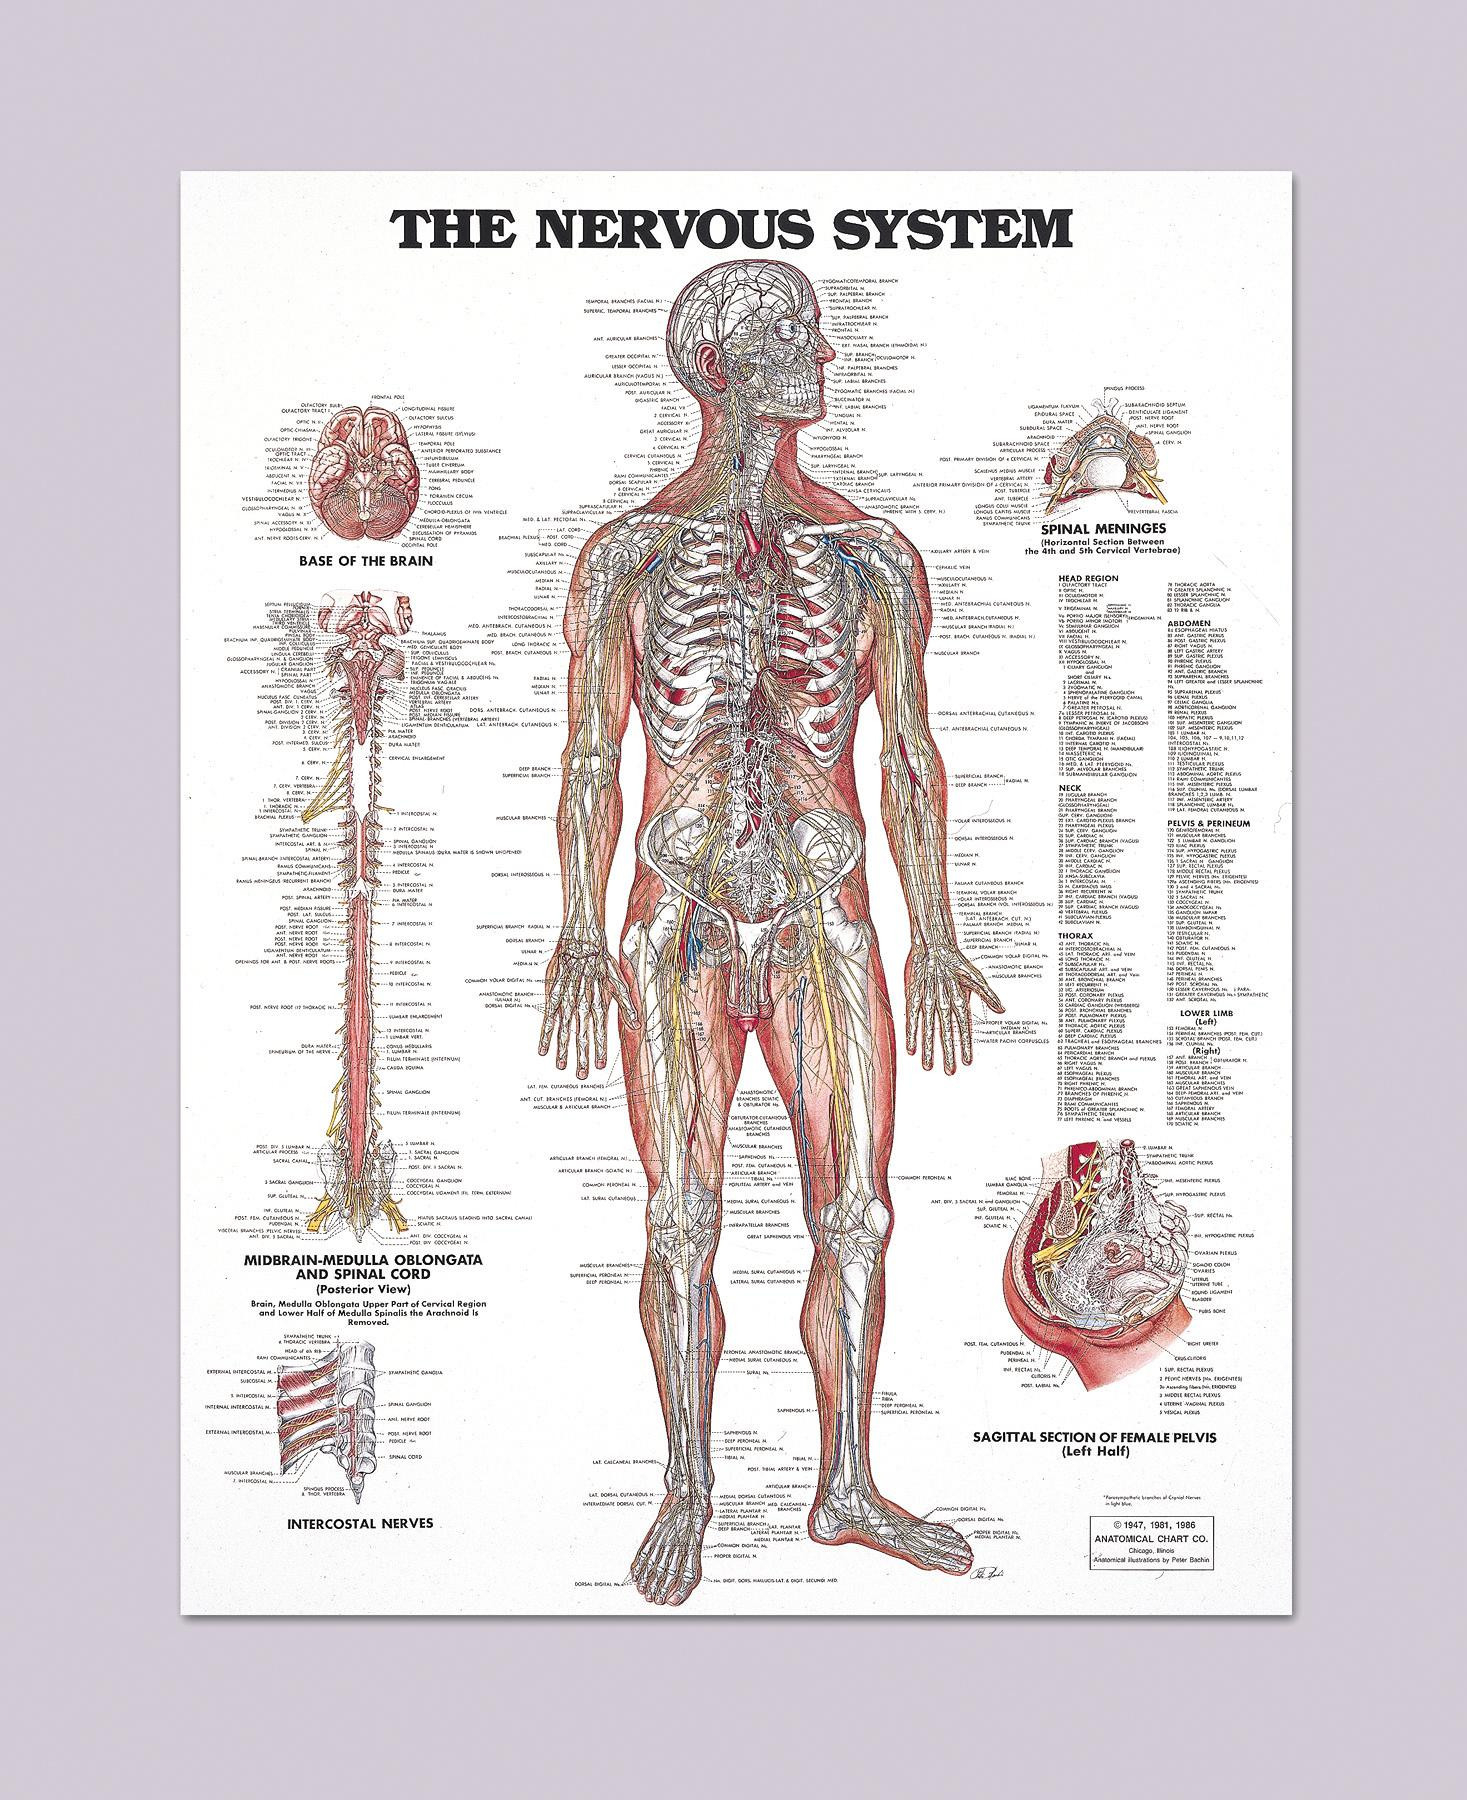 Nervous System Diagram The Anatomical Nervous System Detailed Diagram 20 Wide X 26 High